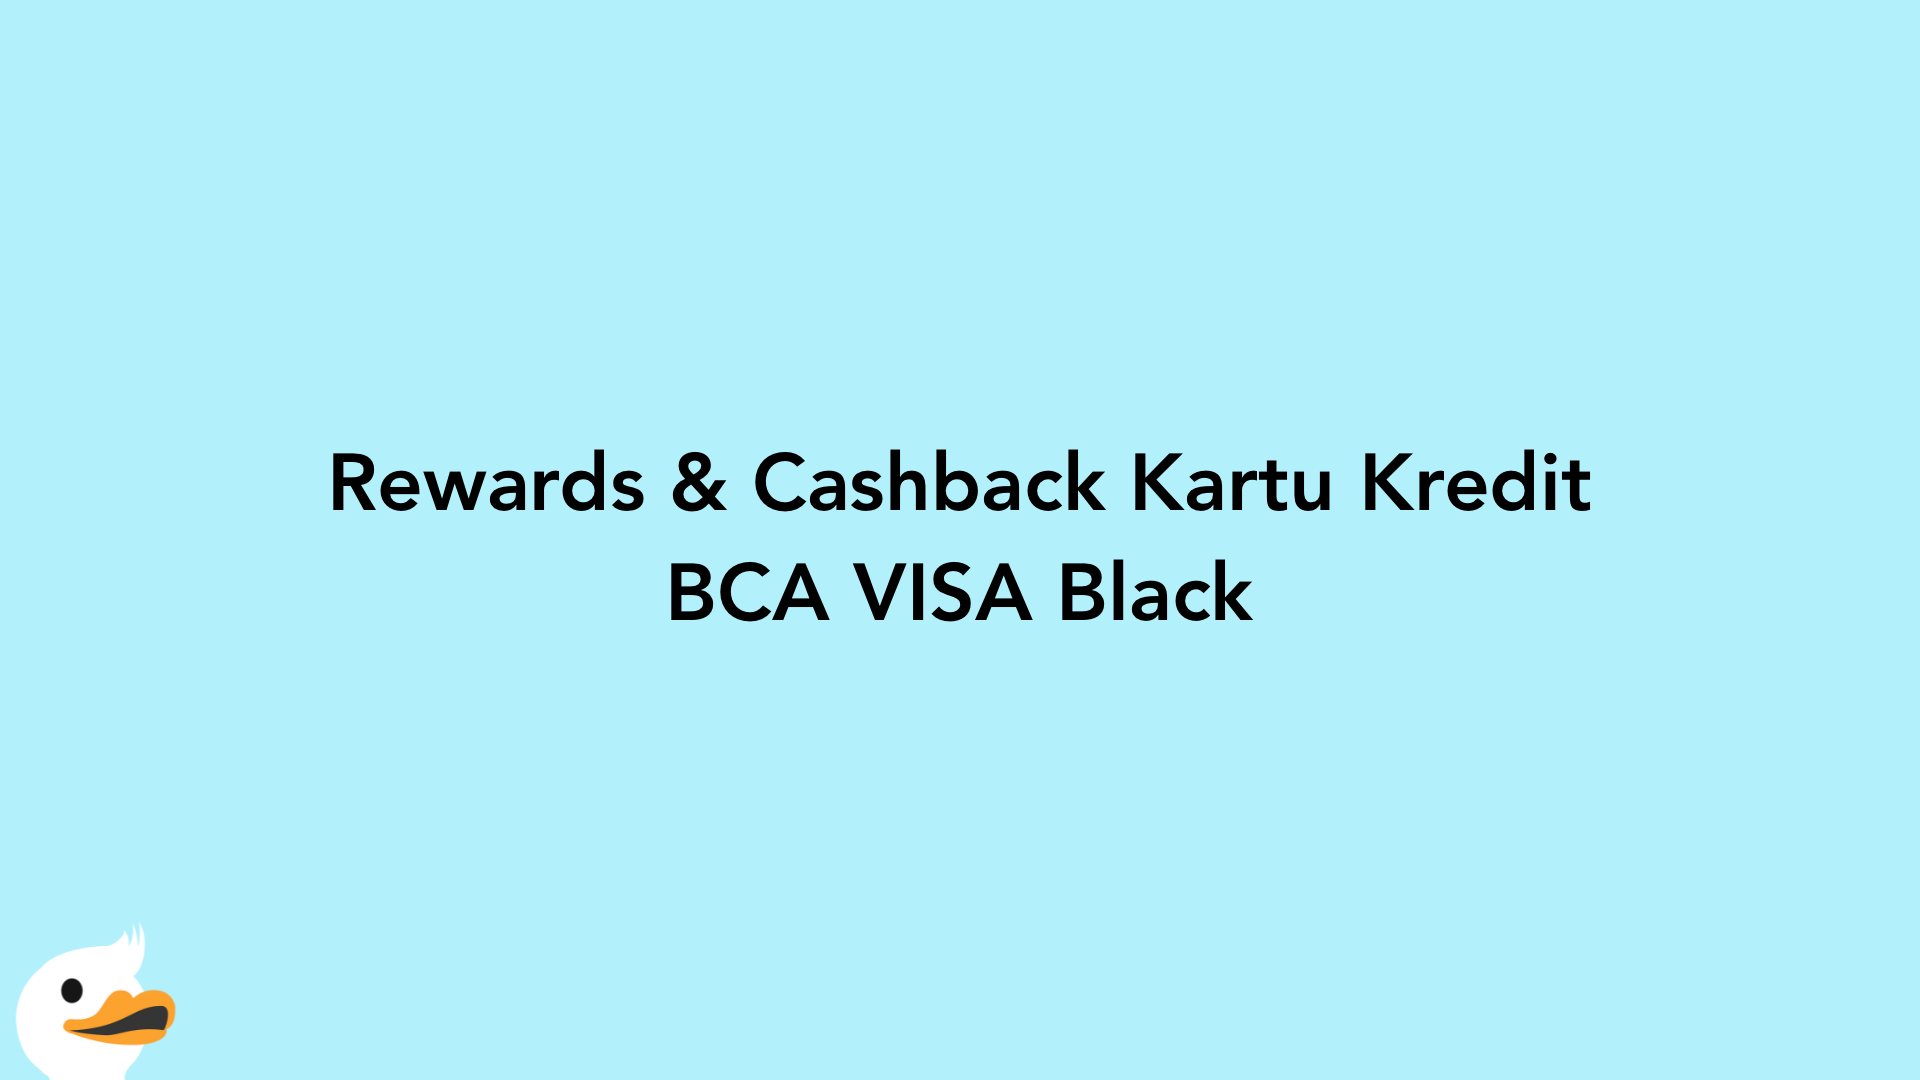 Rewards & Cashback Kartu Kredit BCA VISA Black